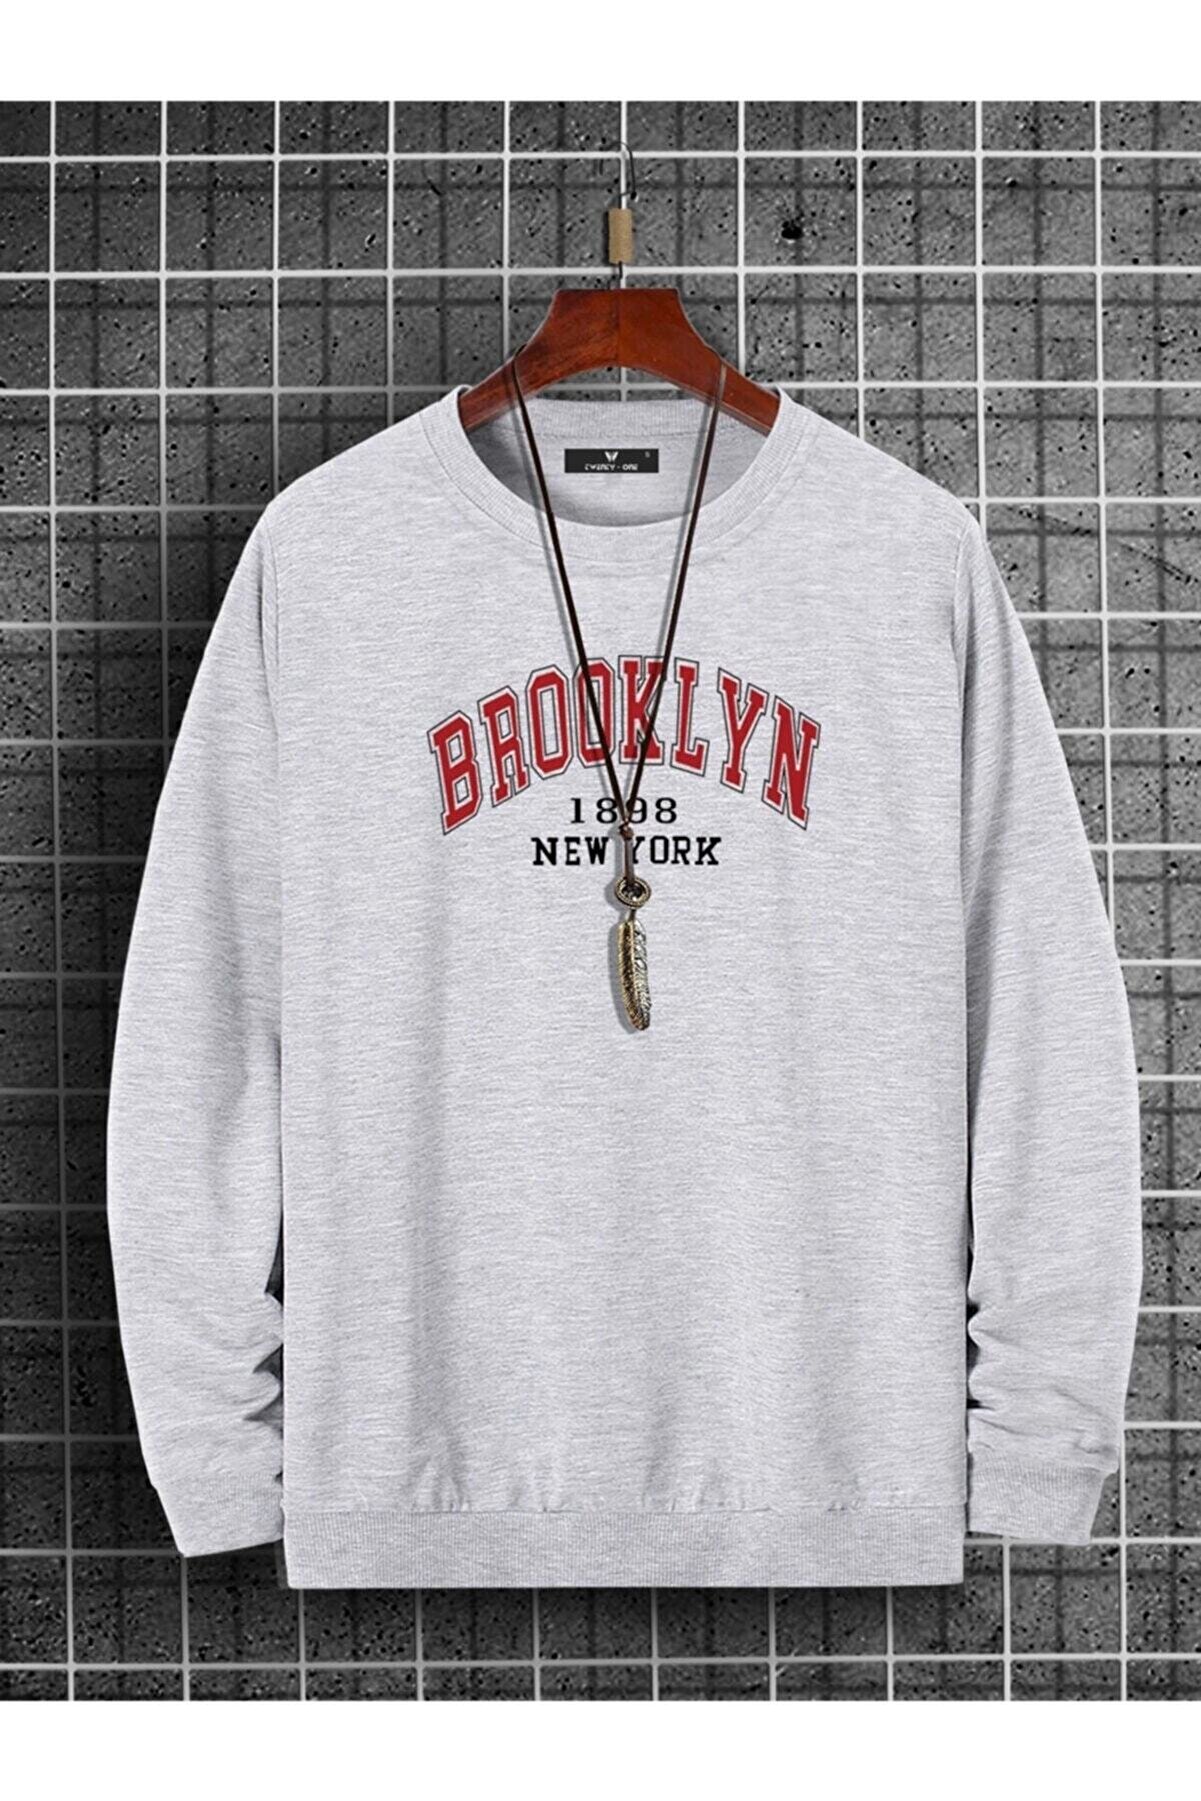 Know Erkek Brooklyn Baskili Gri Oversize Sweatshirt